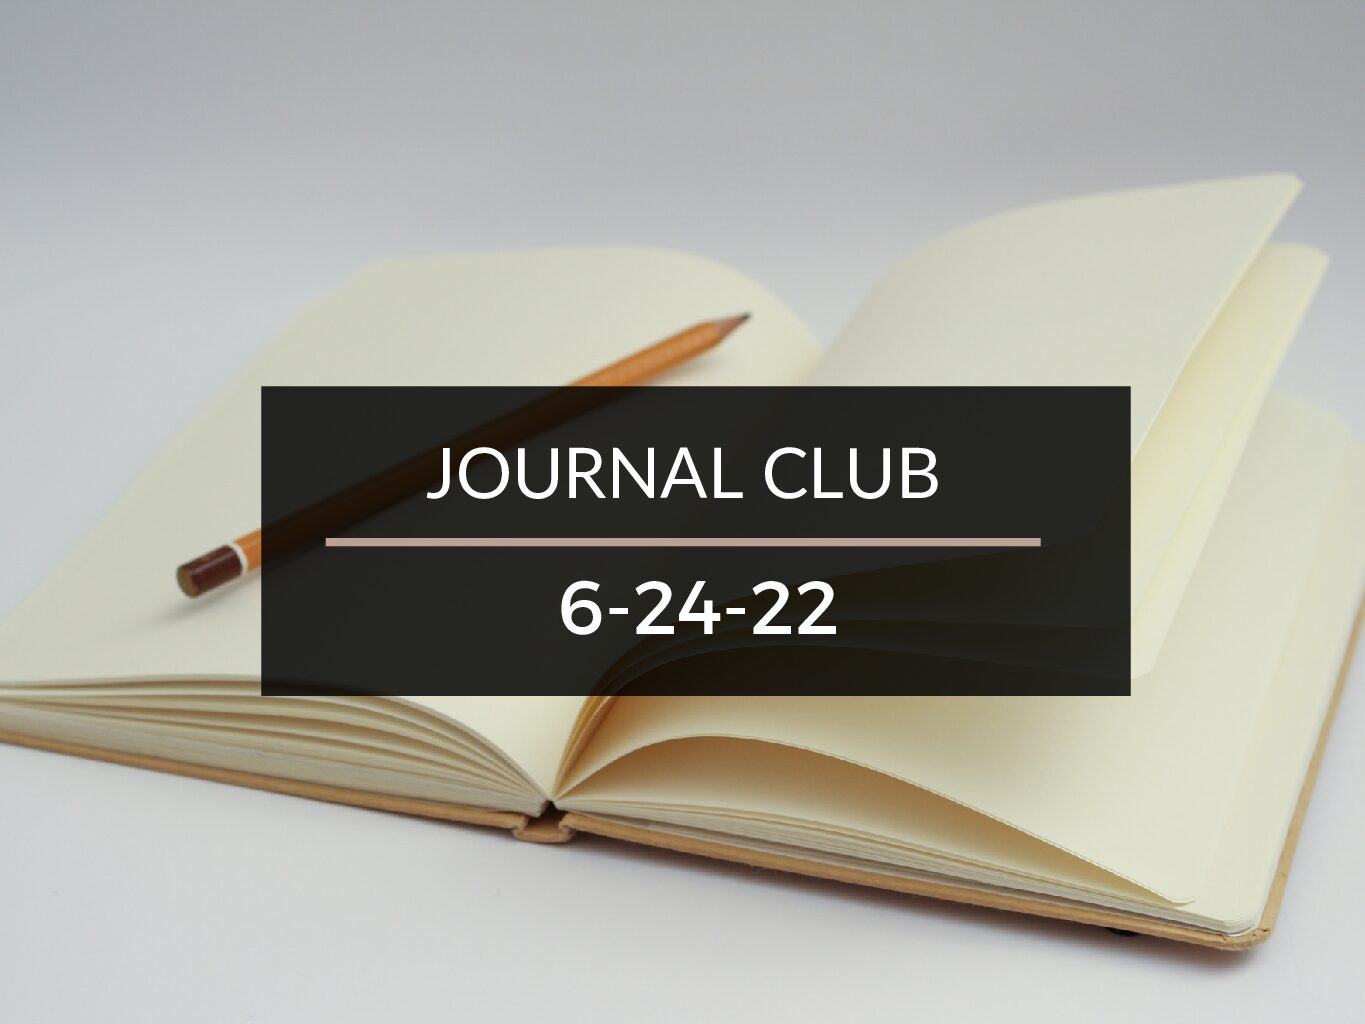 PIMD Journal Club Image 1 pdf